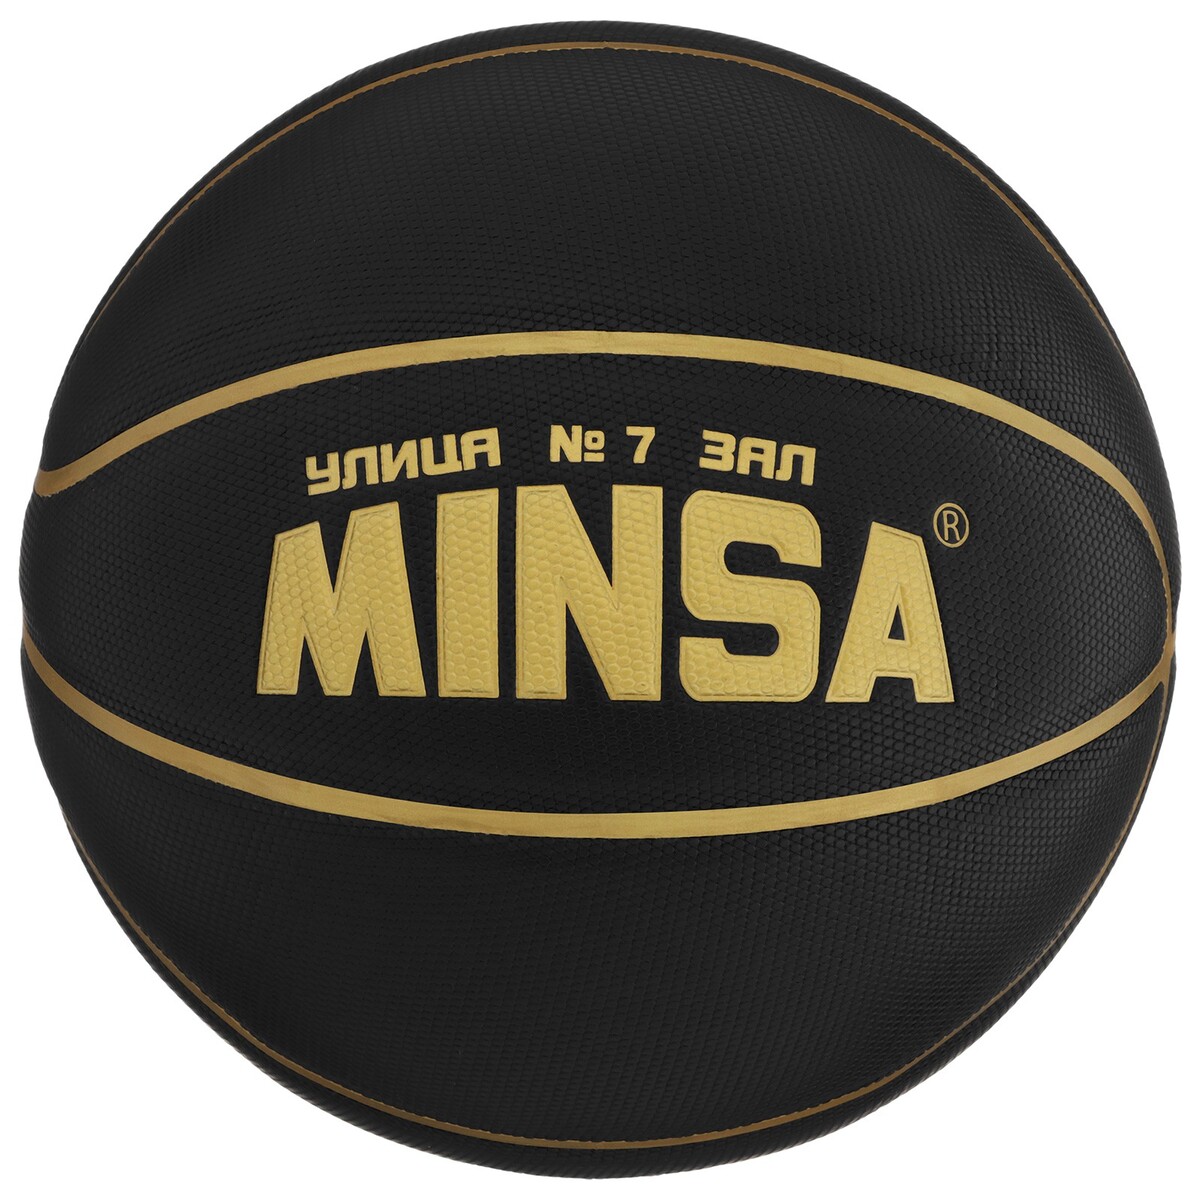 Баскетбольный мяч minsa, pu, размер 7, 600 г мяч баскетбольный wilson ncaa legend wz2007401xb7 р 7